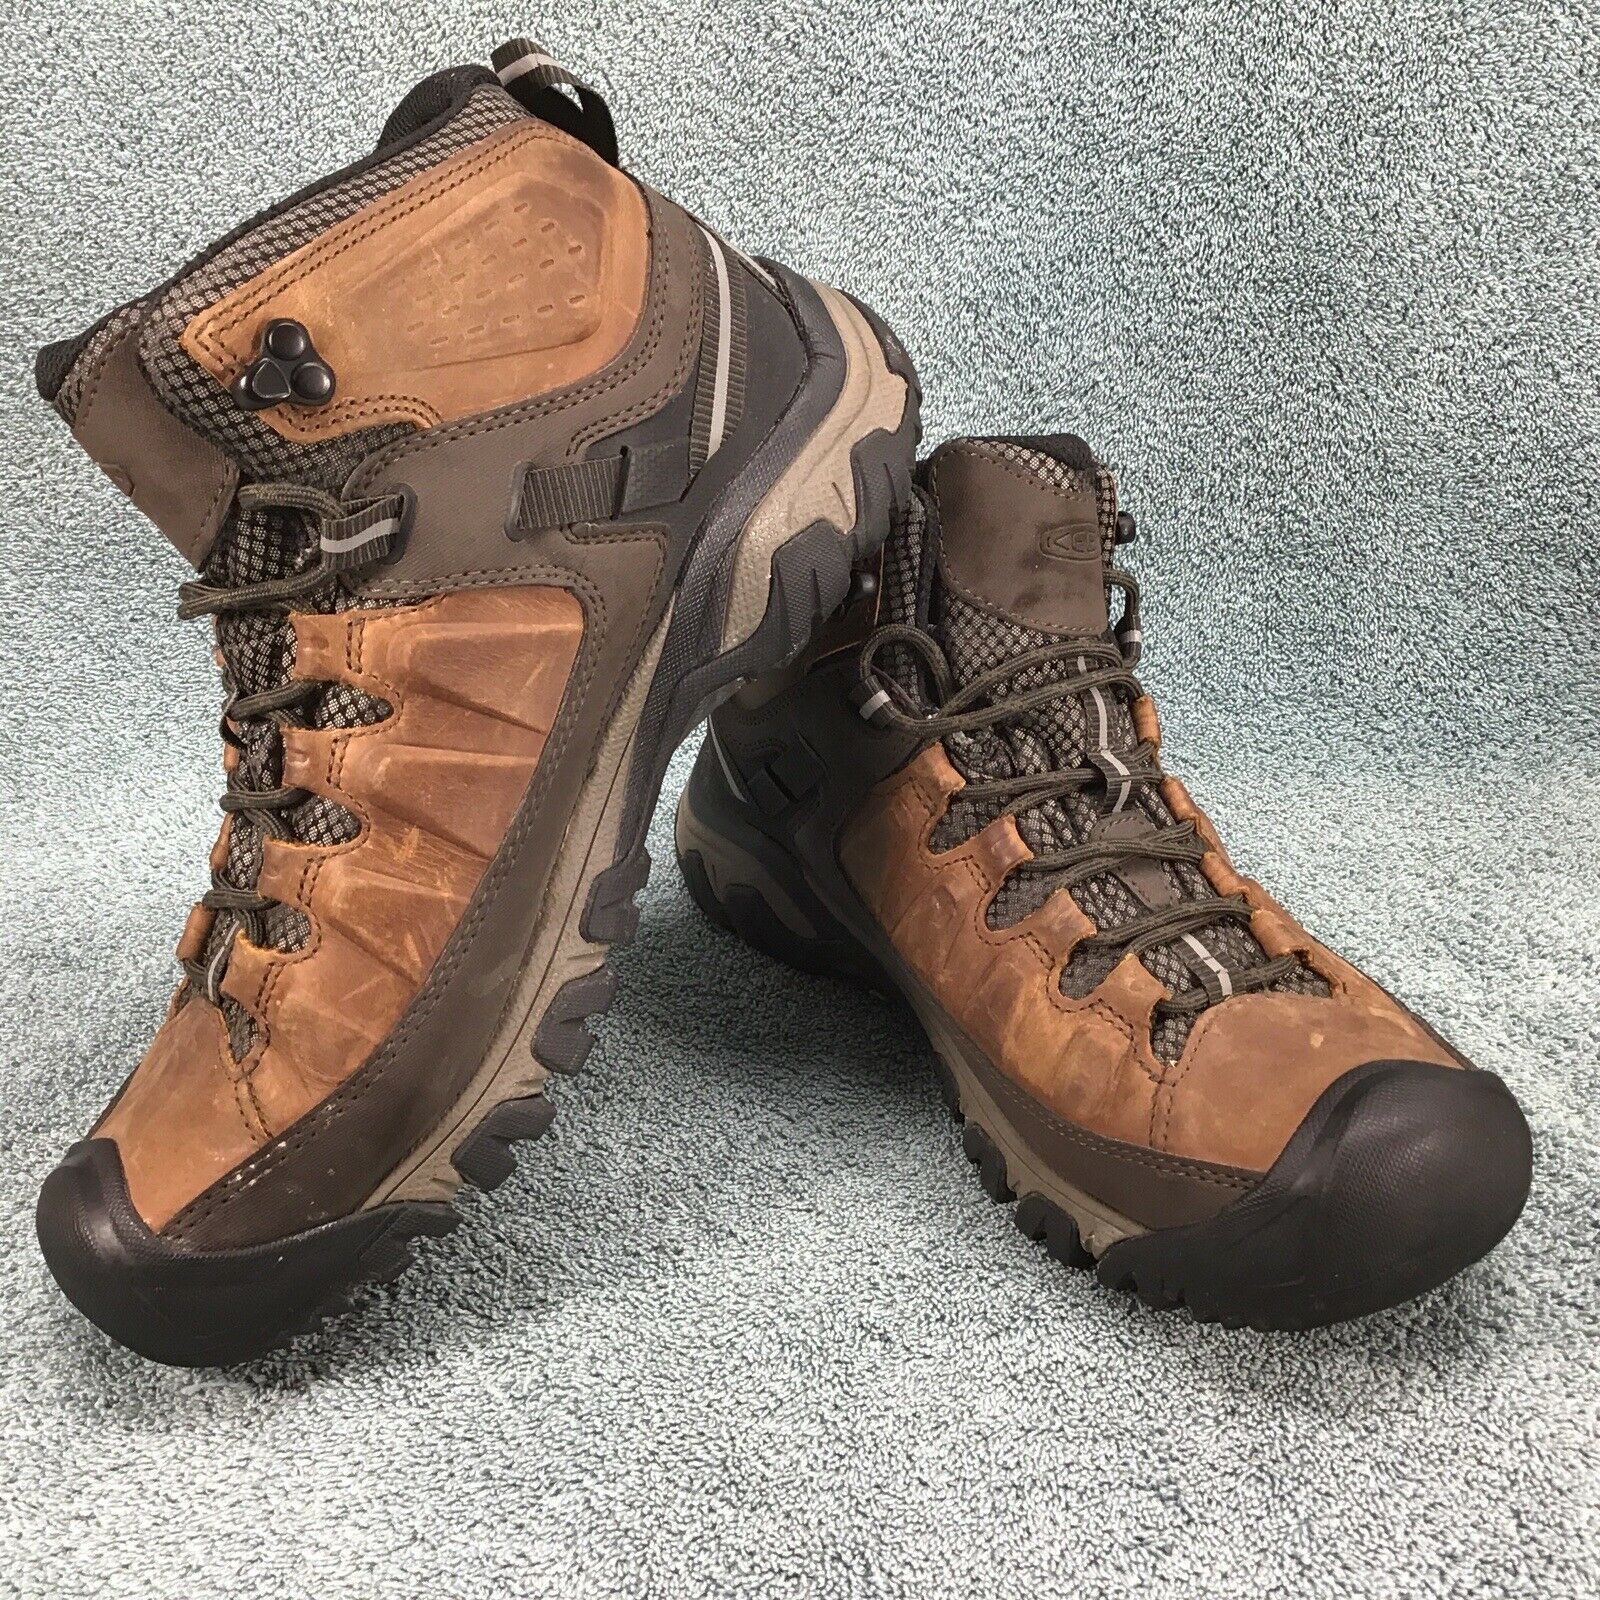 Keen Targhee III Waterproof Mid Hiking Boots 1023030 Men's Size 9.5 M